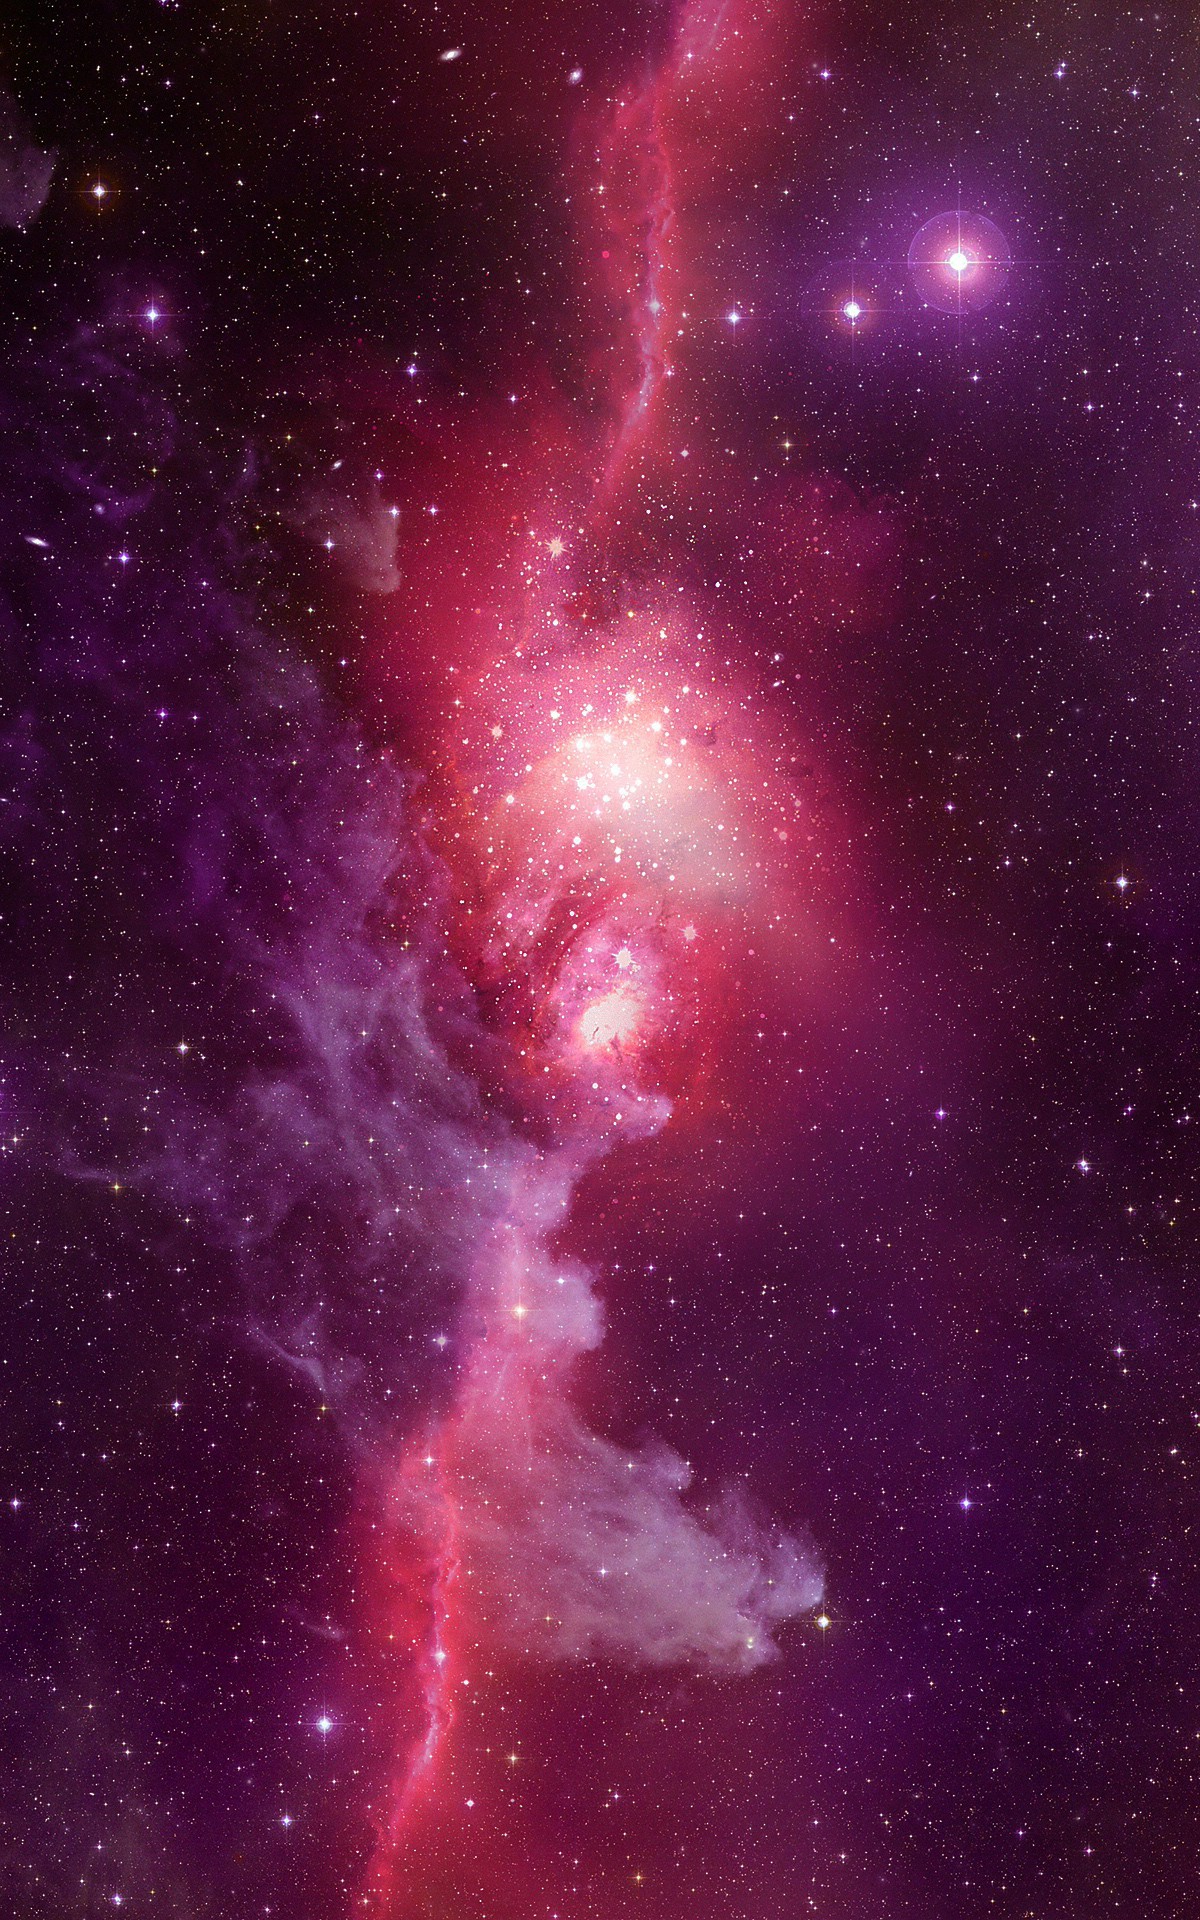  Galaxy  background Tumblr   Download free beautiful 